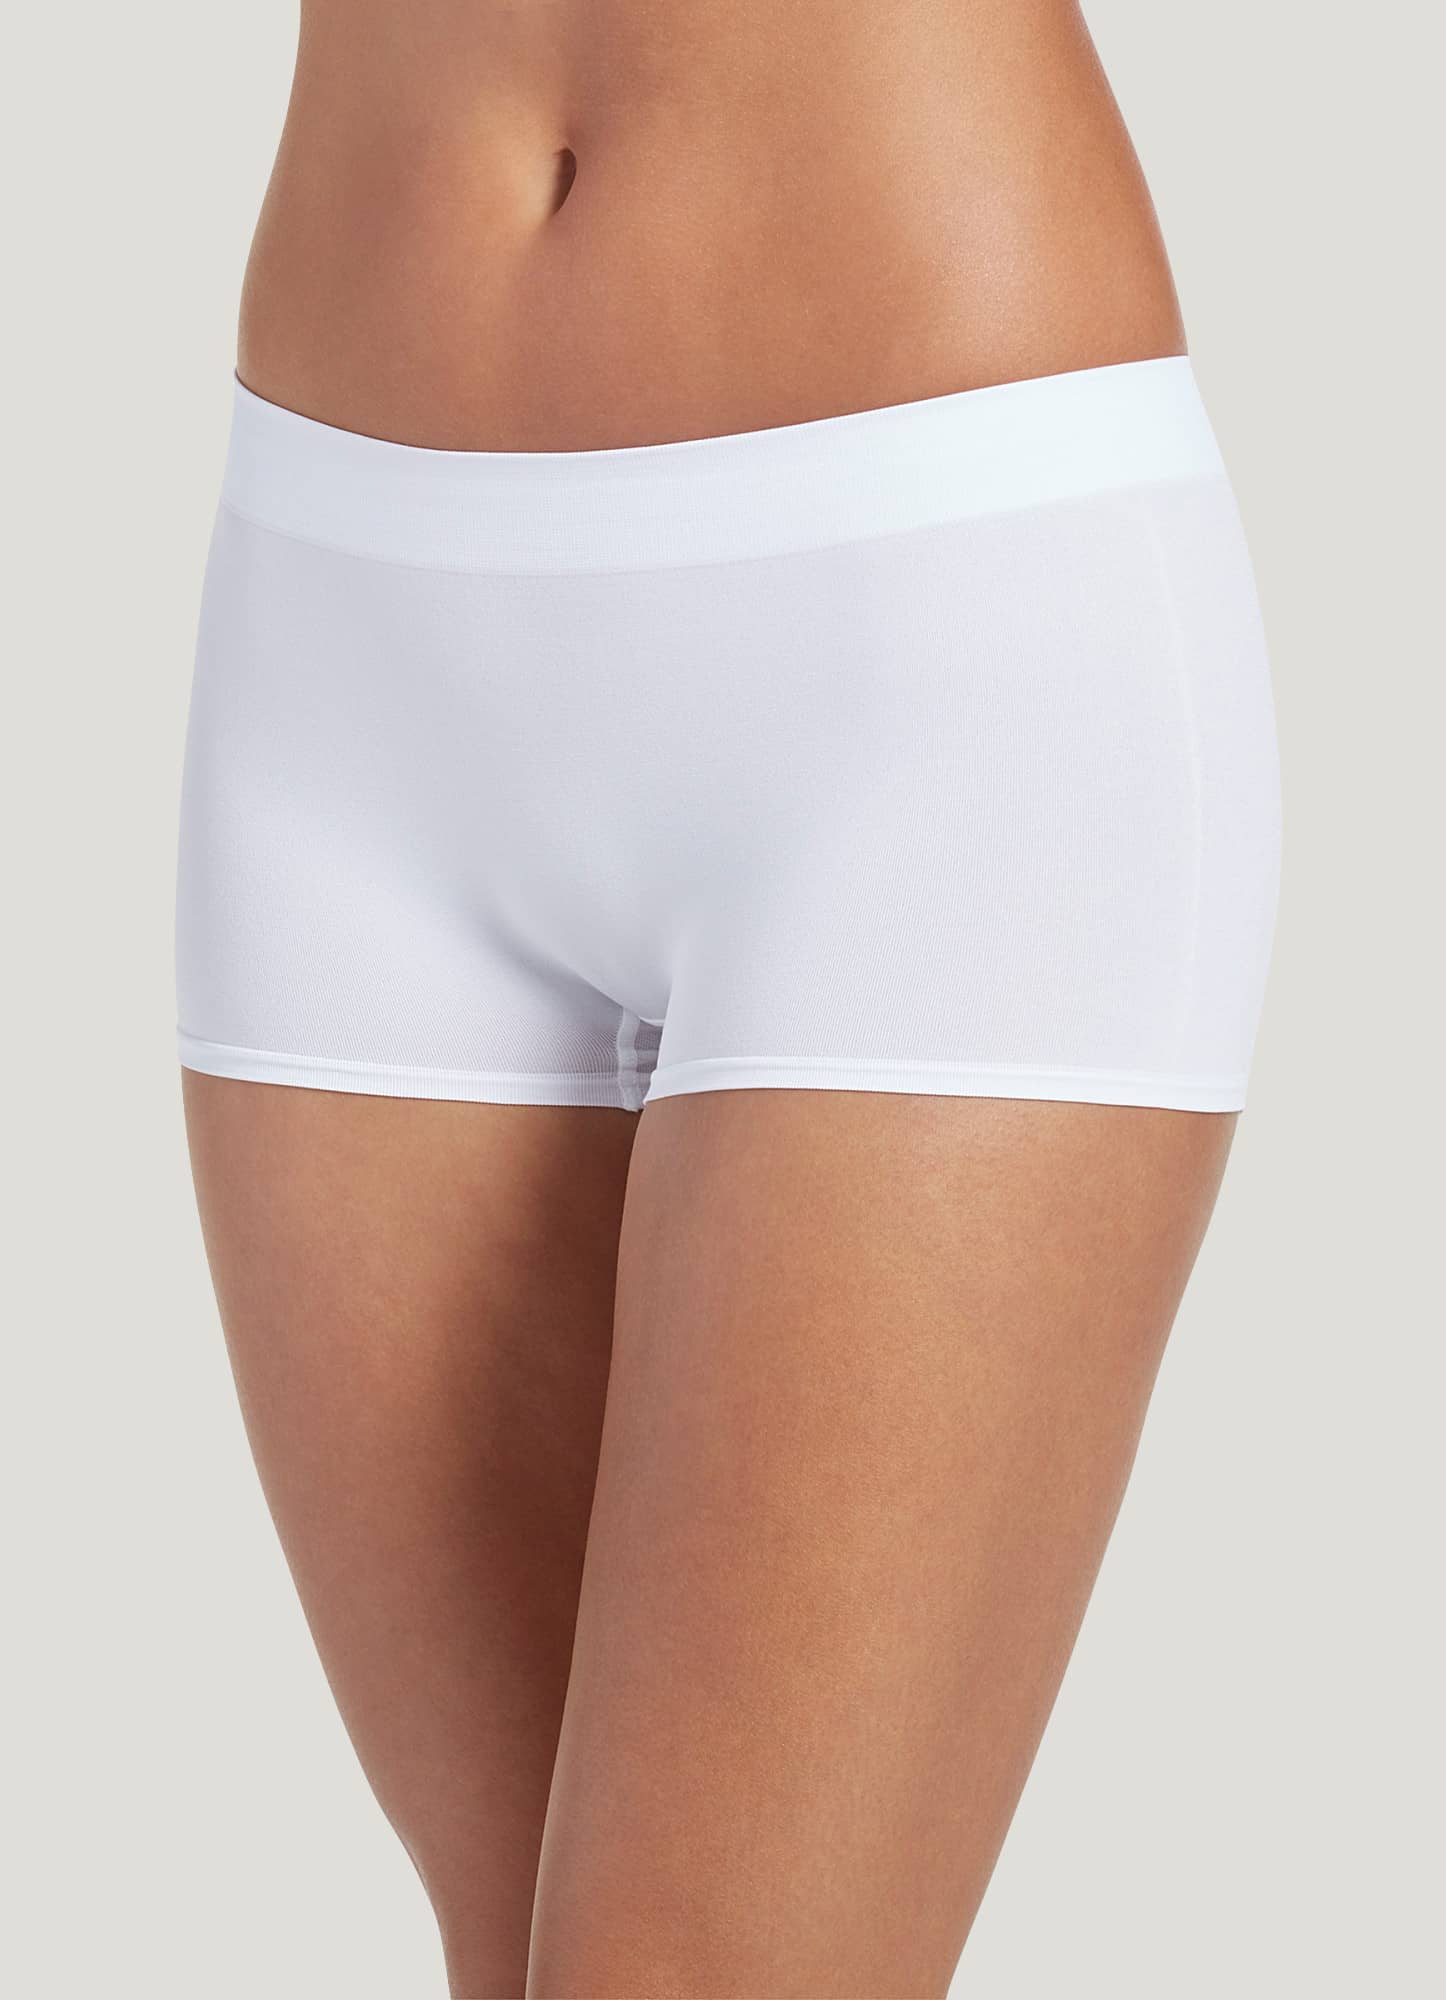 Microfiber Boyshort Plus Size Panties for Women for sale